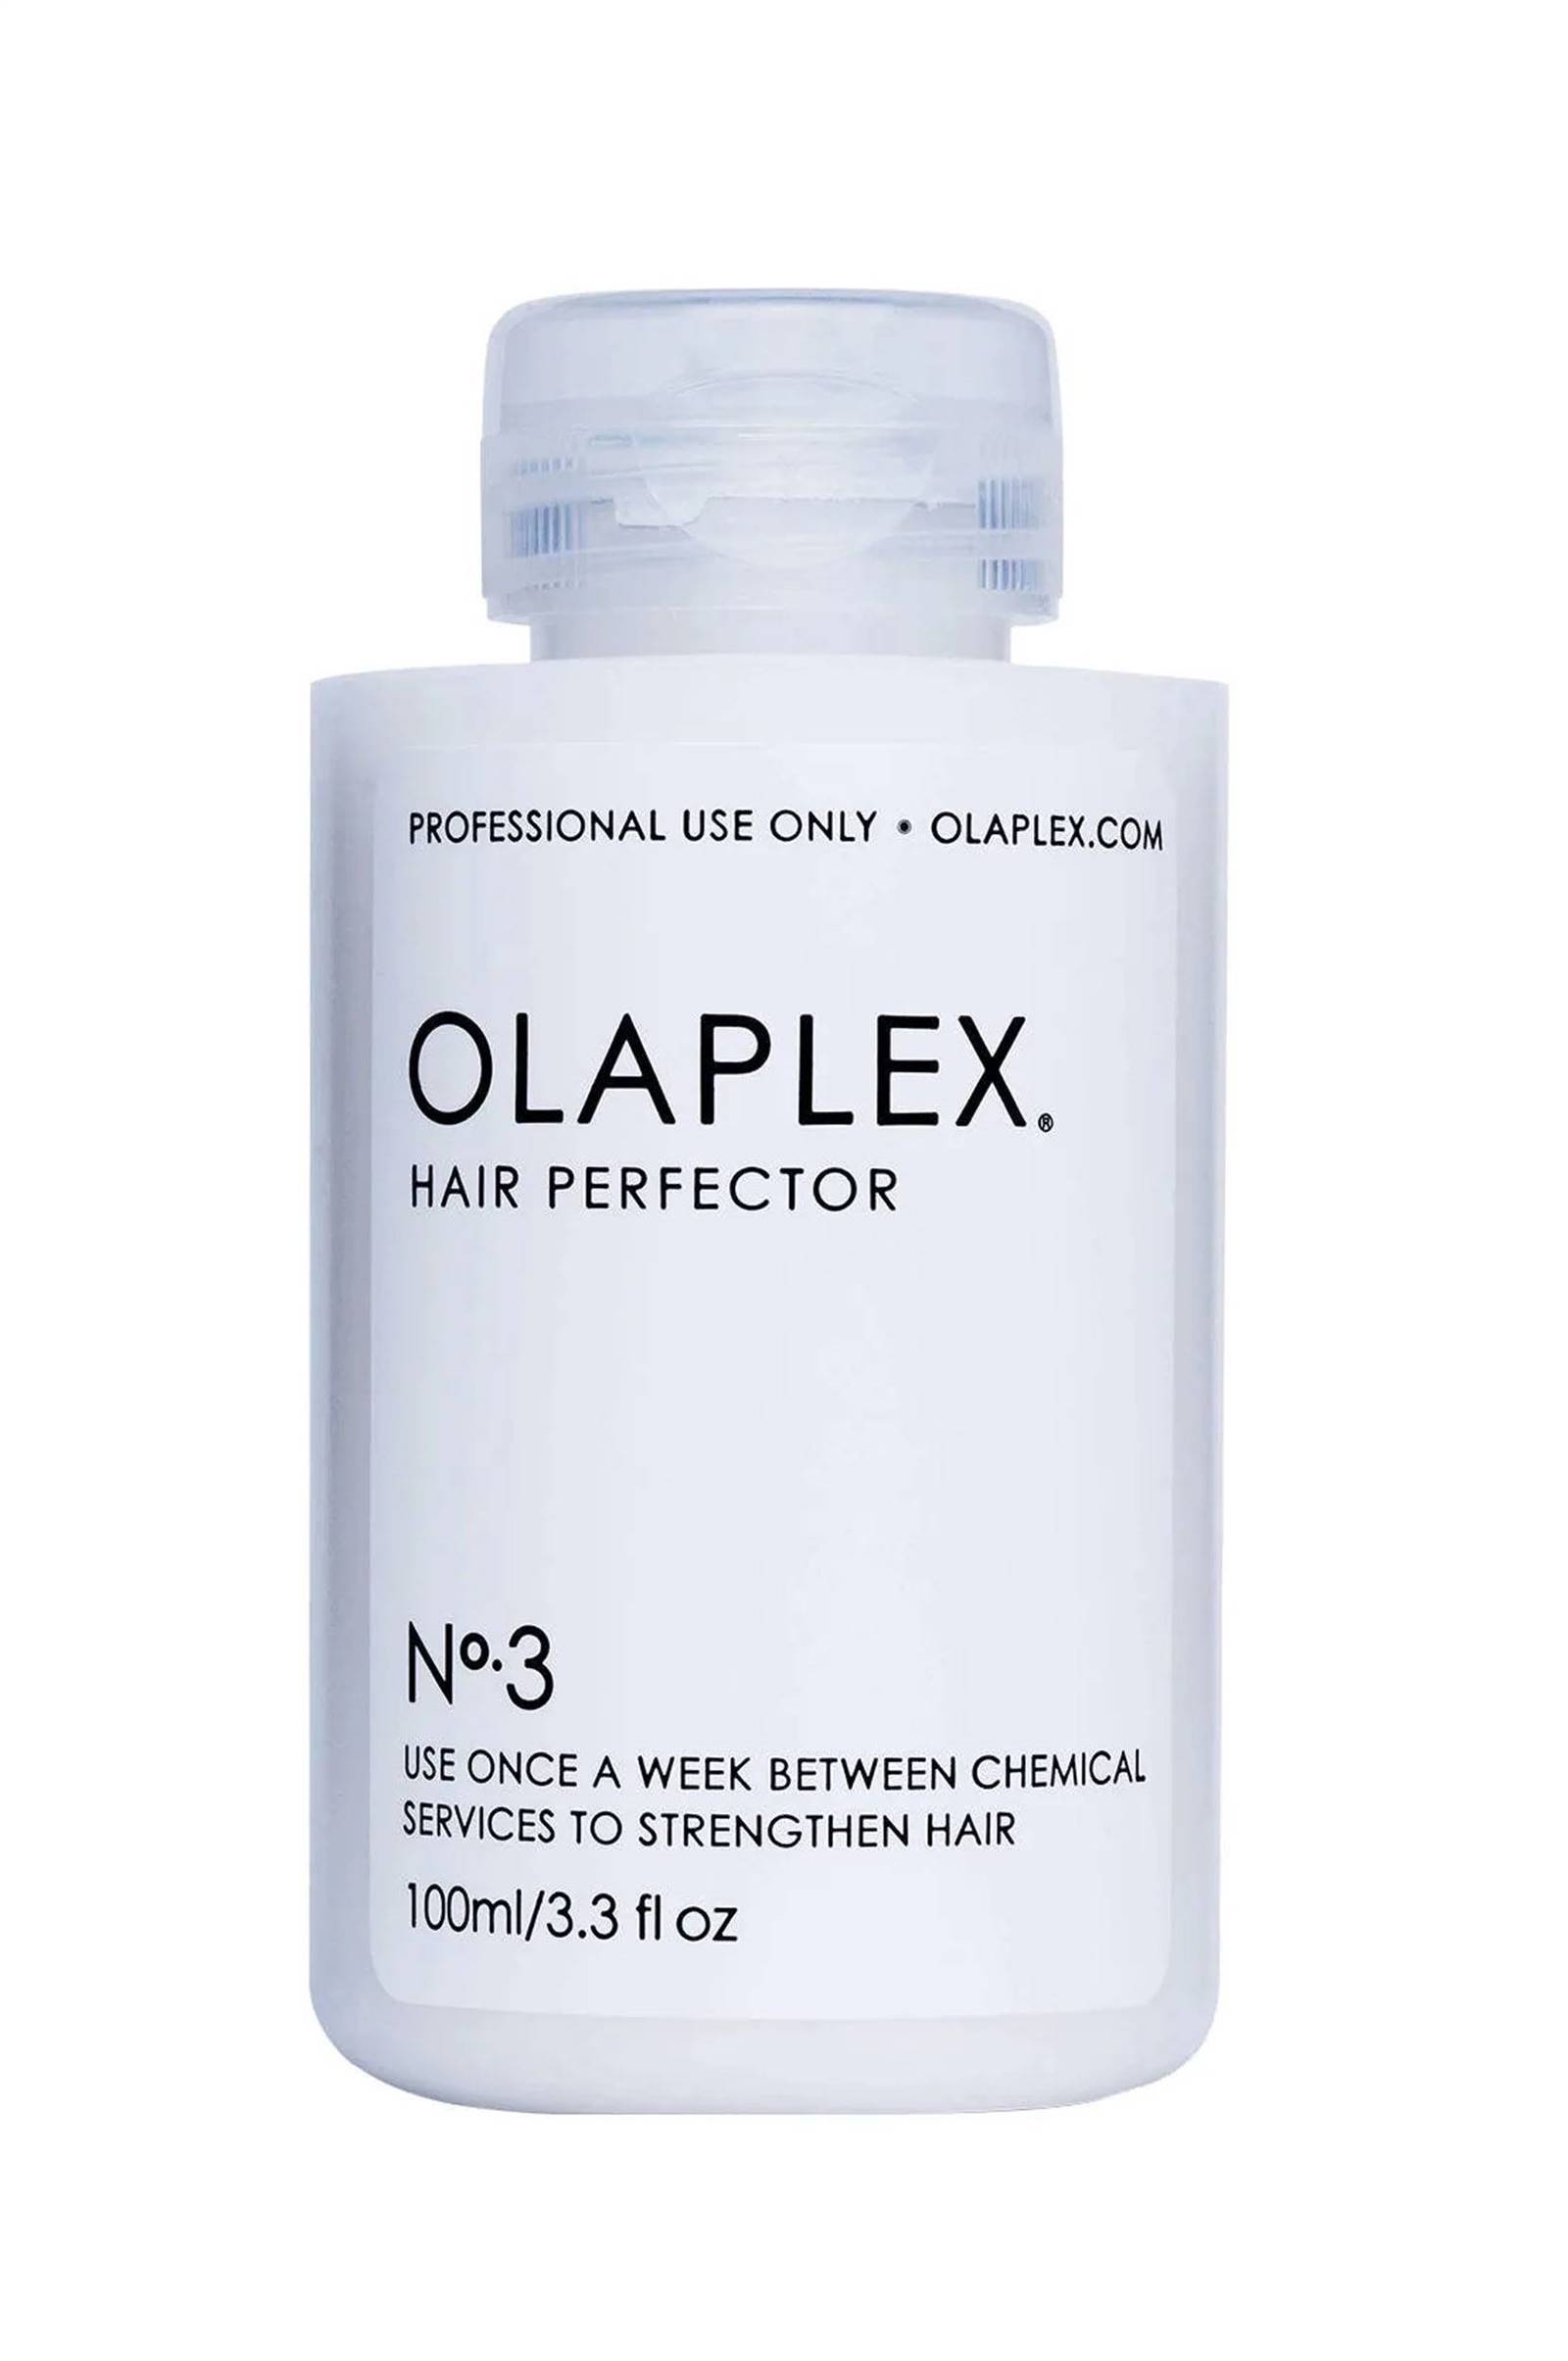 Mejores mascarillas para pelo: Olaplex nº3 hair perfector para pelo debilitado